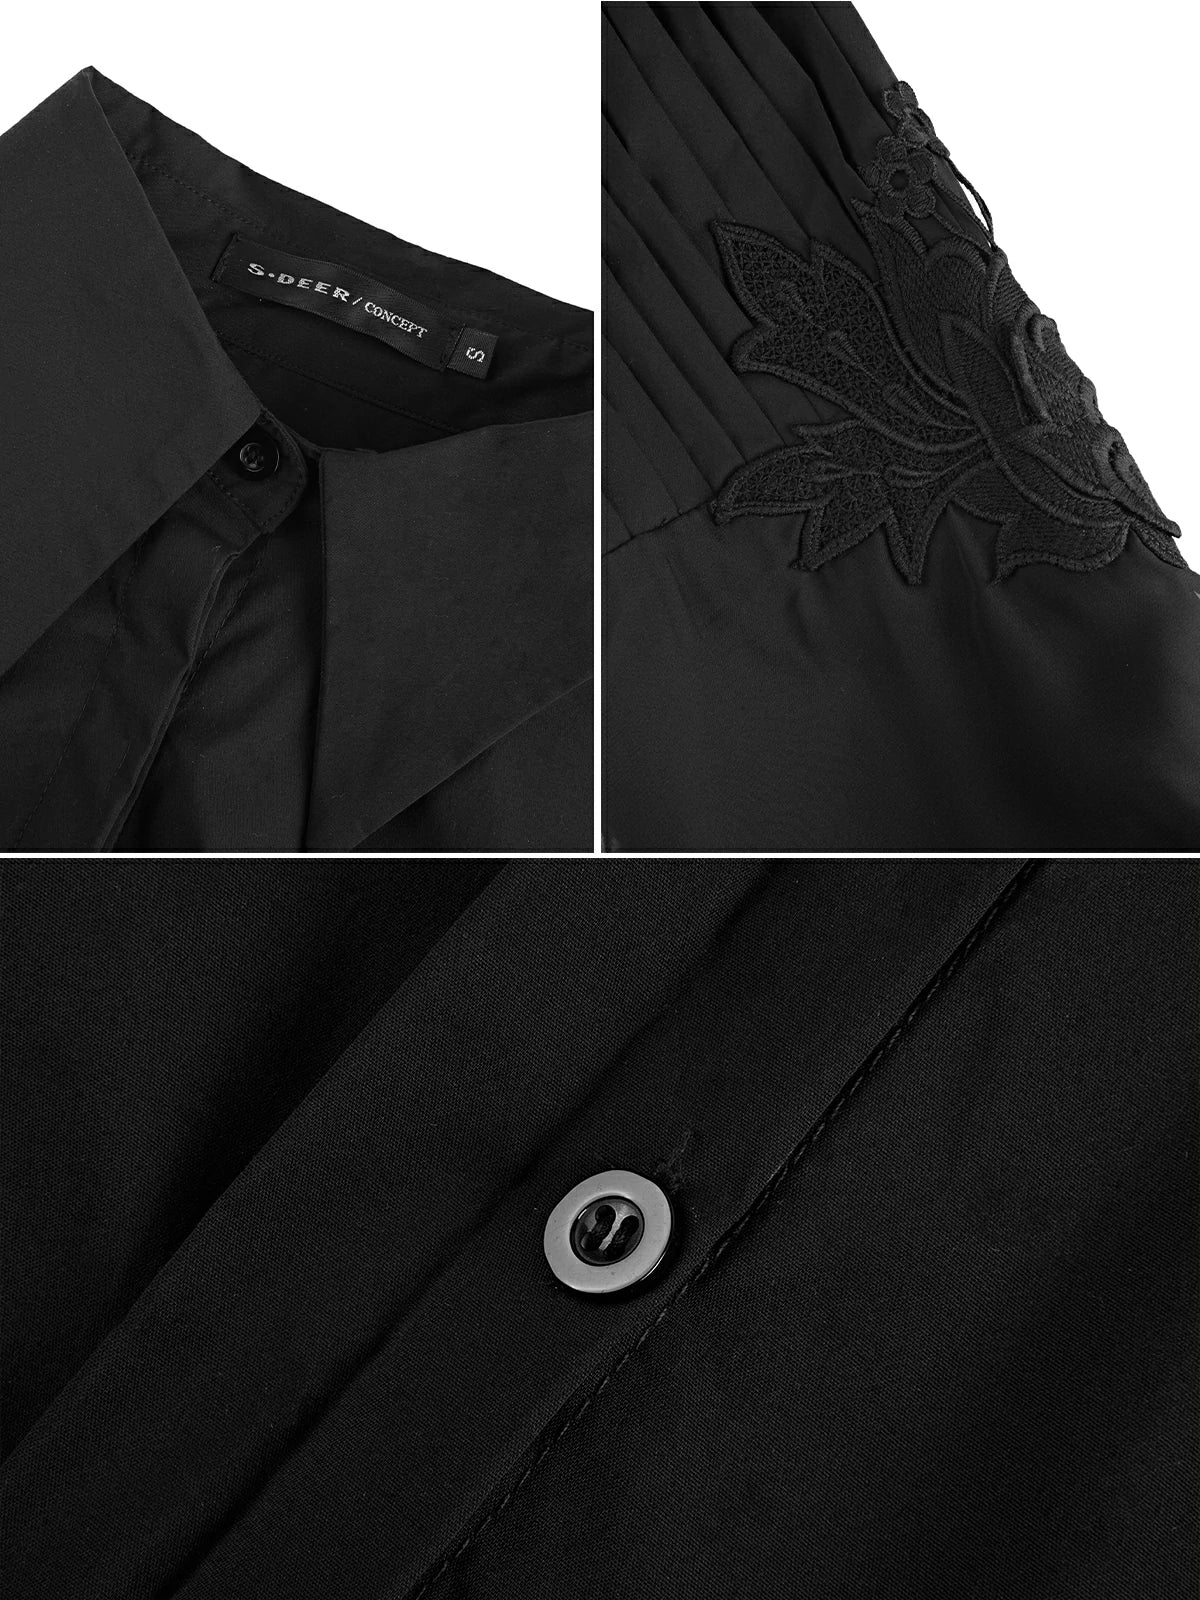 Fashion-forward black shirt with unique sleeve detailing